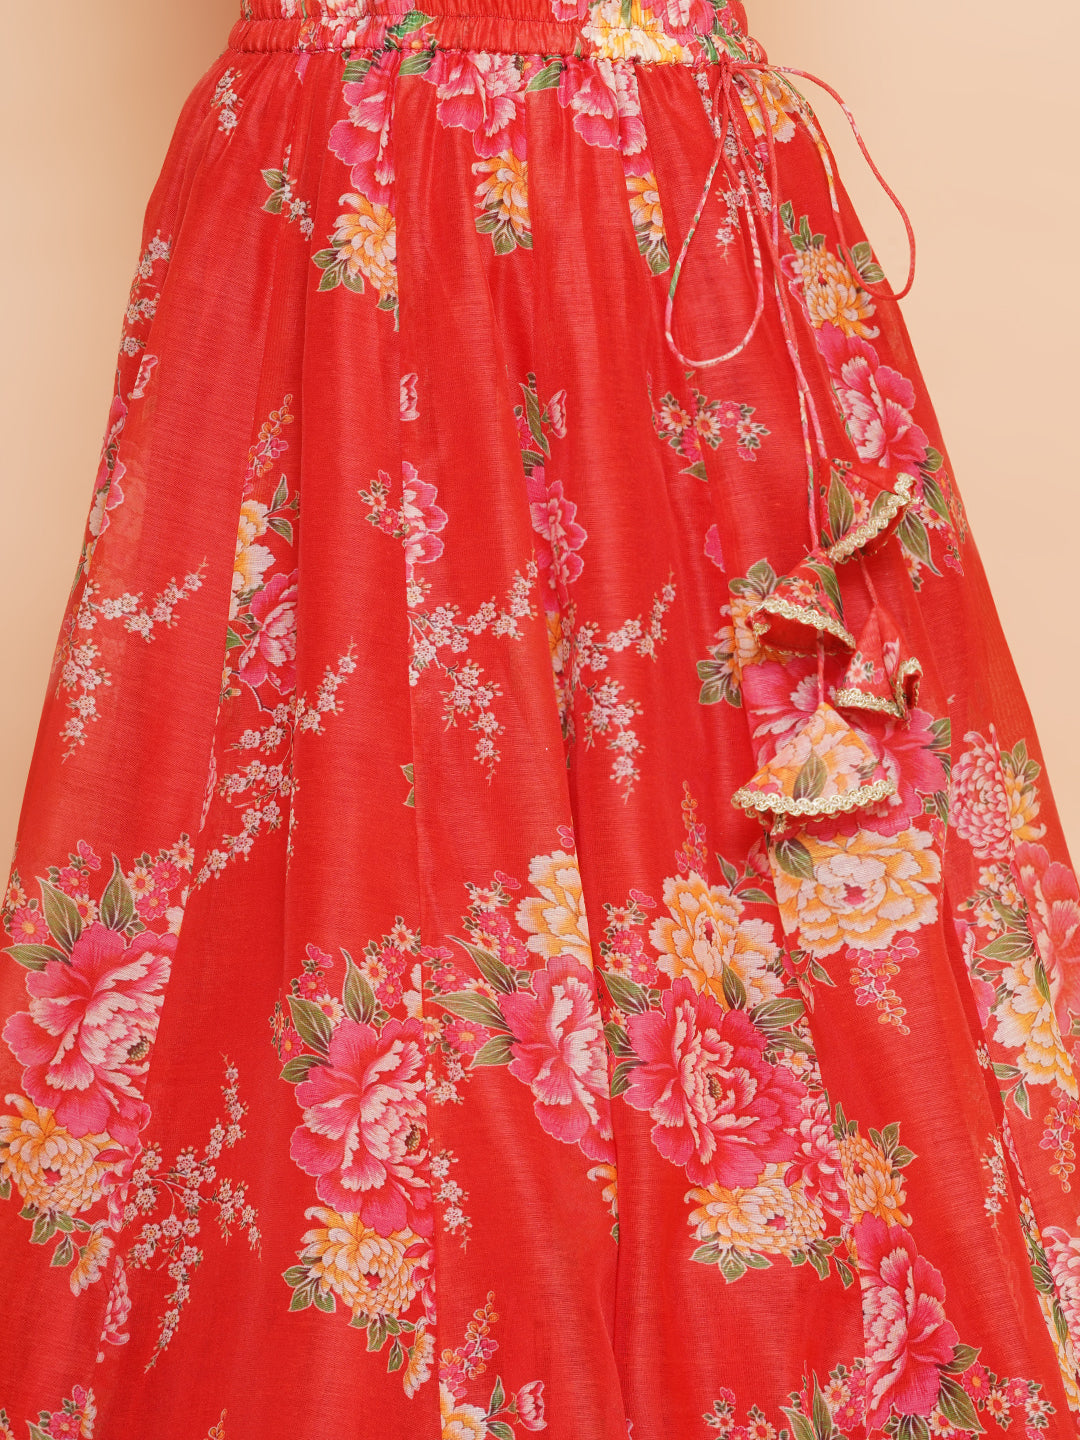 Girls Red & Green Digital Flower Print Lace work Choli Lehenga with Dupatta